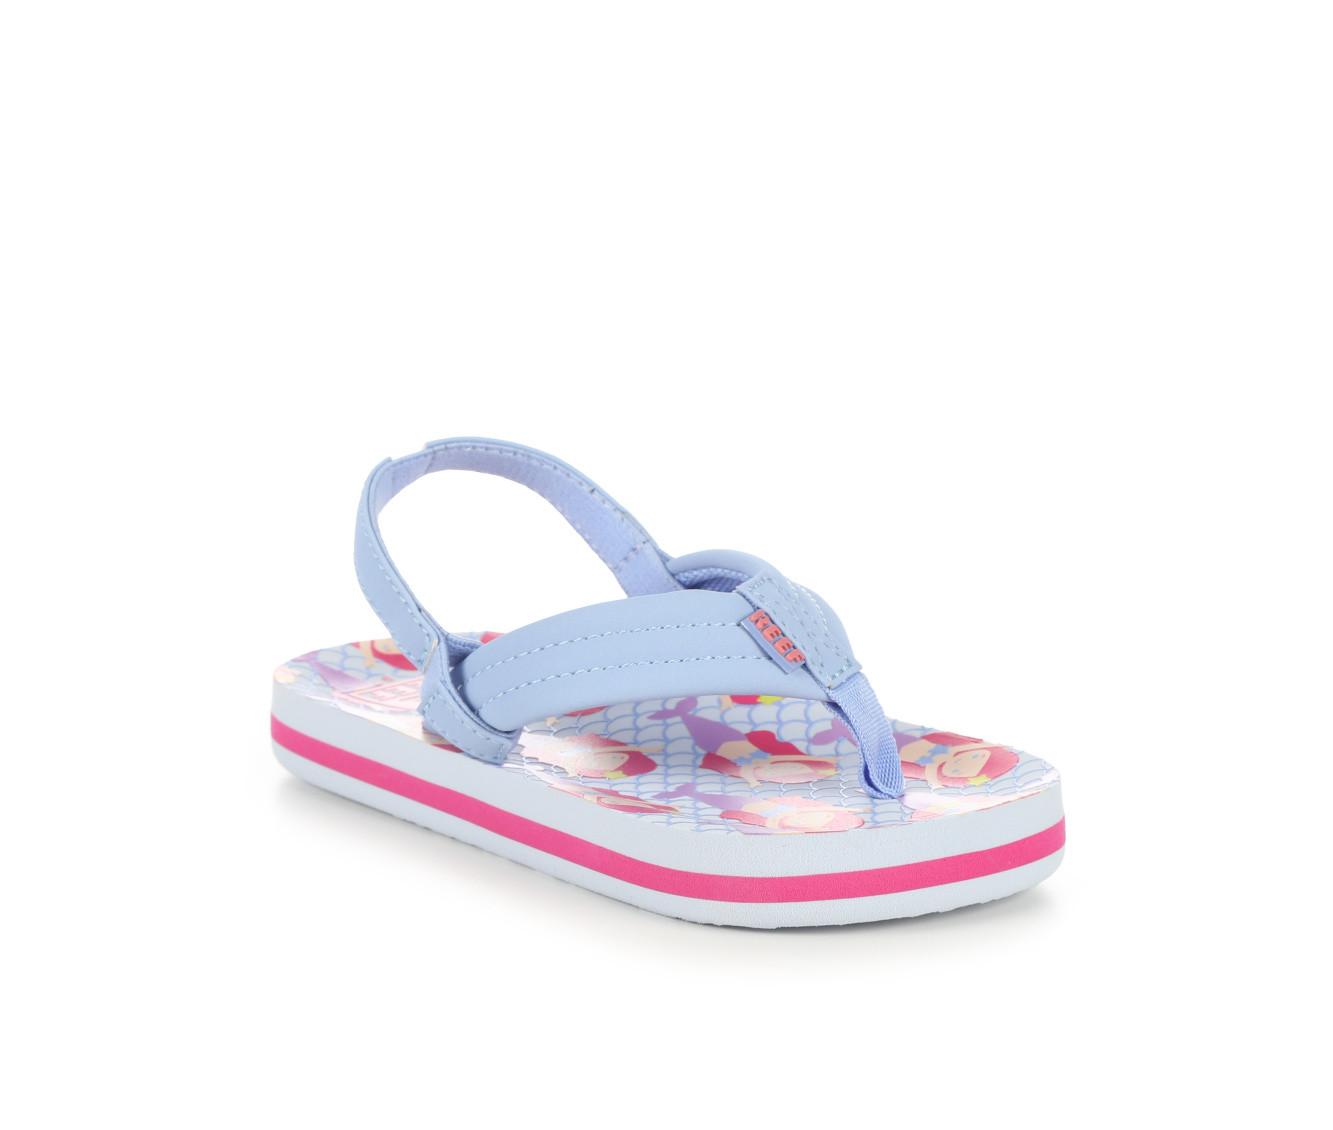 Girls' Reef Toddler & Little Kid Little Ahi Flip-Flop Sandals